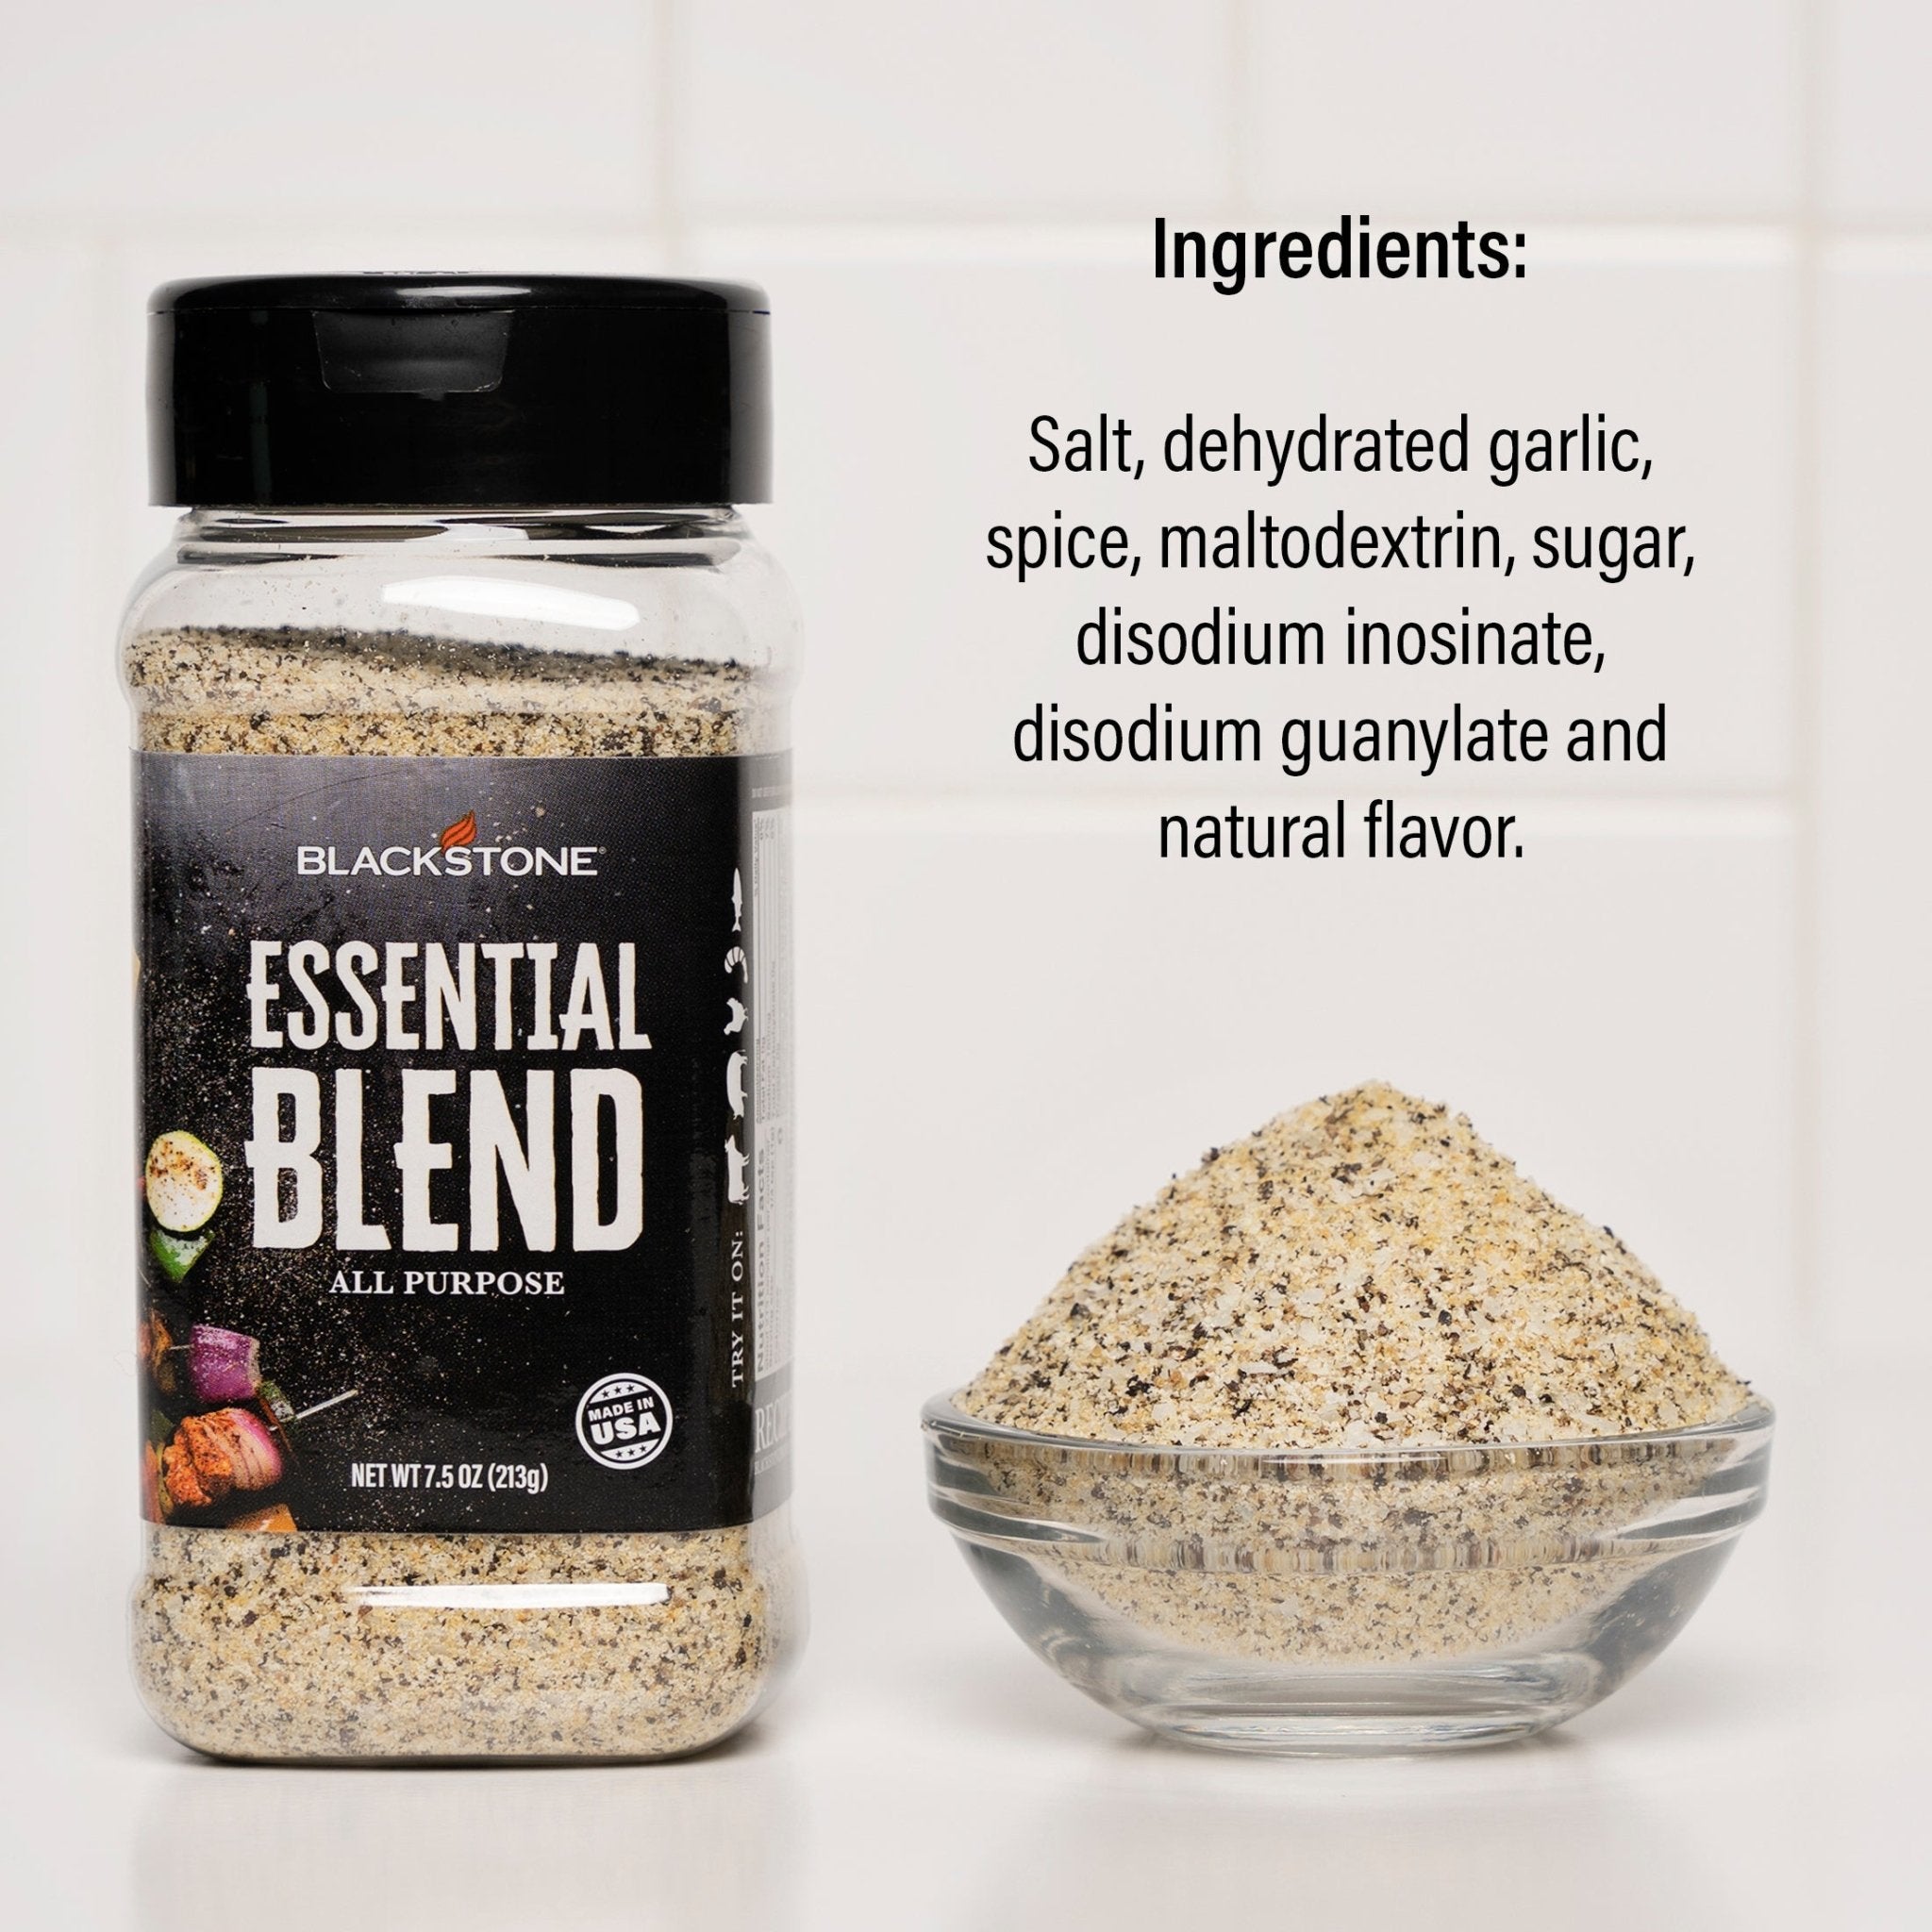 Essential Blend Seasoning - Blackstone Products